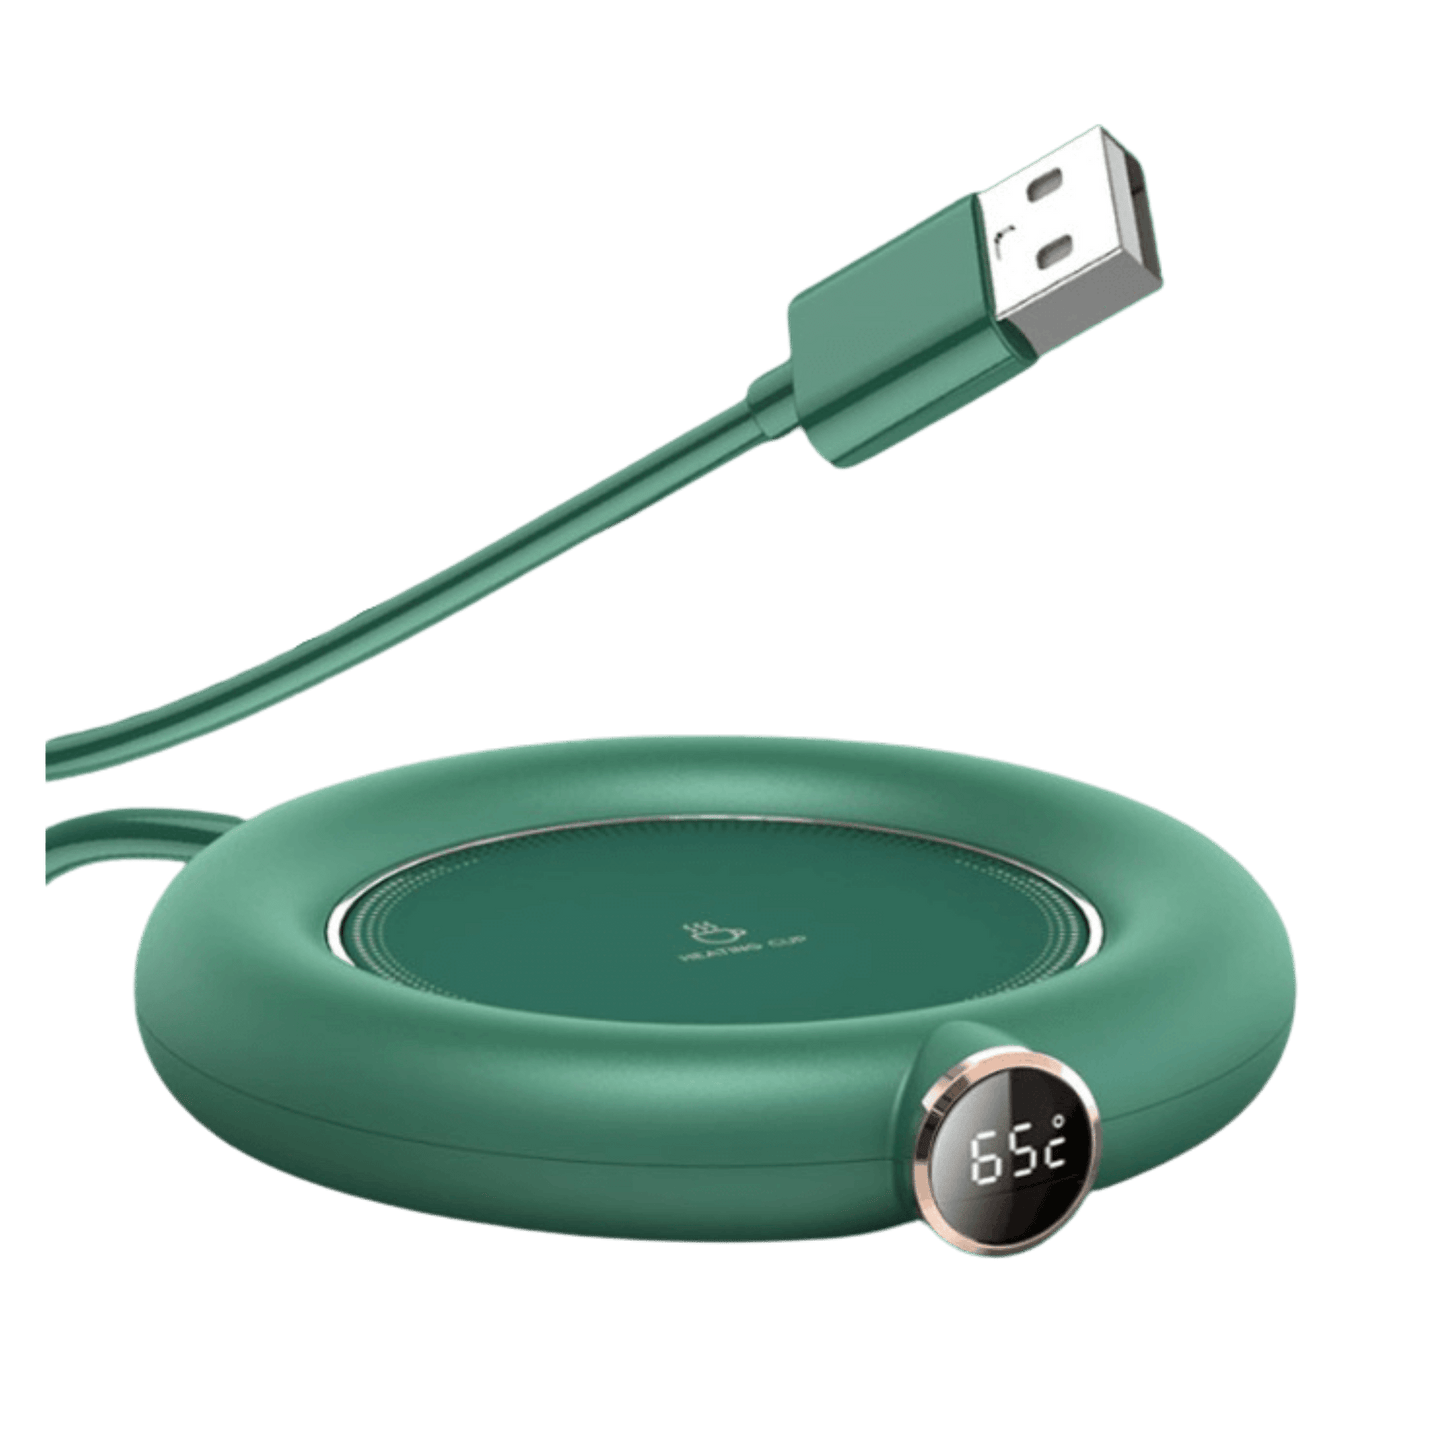 Electric Coffee Mug Warmer Lightweight Cup Warmer for Home Office (Green USB)